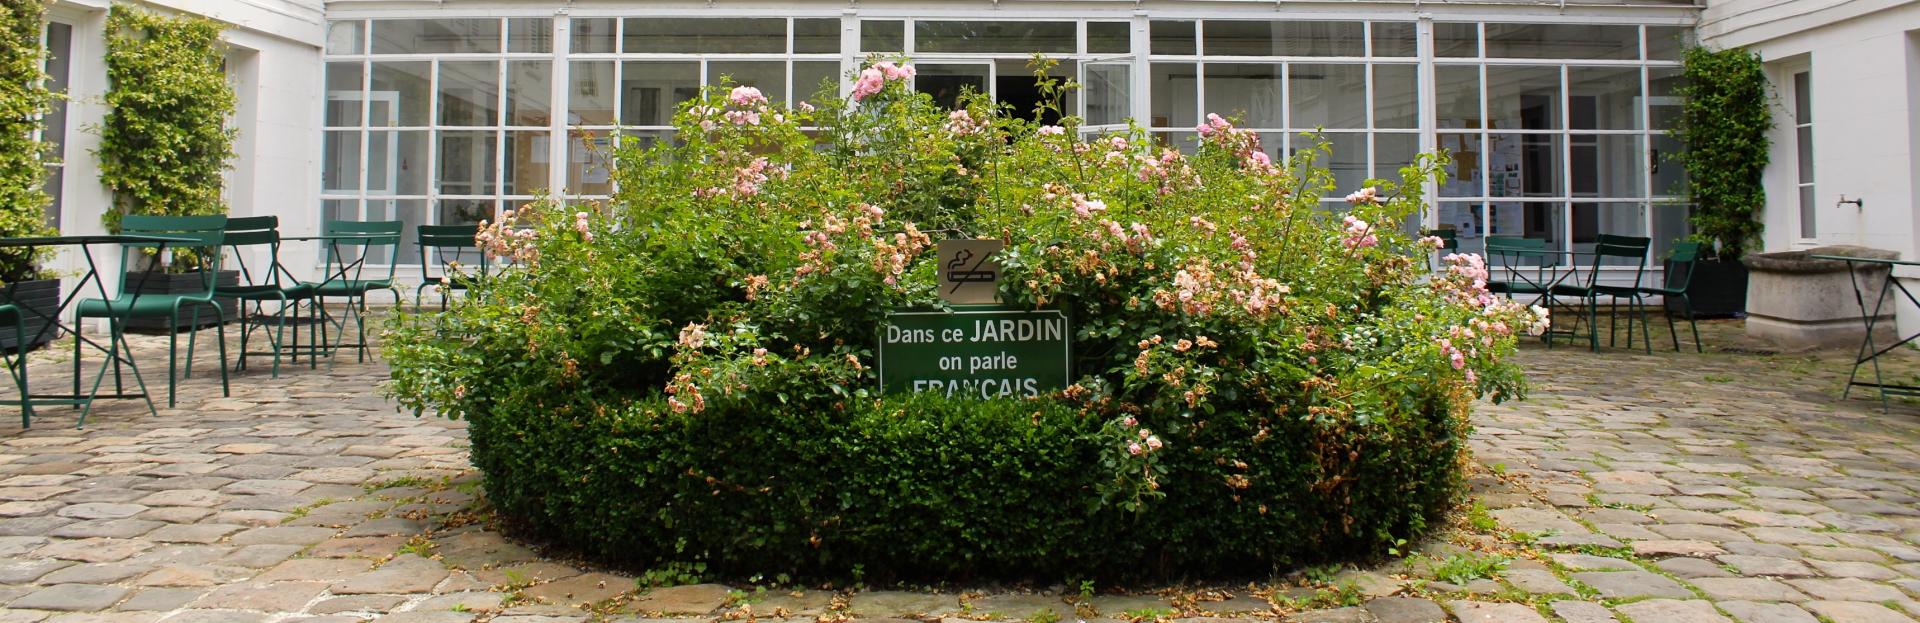 reid hall garden with sign "dans ce jardin on parle français"